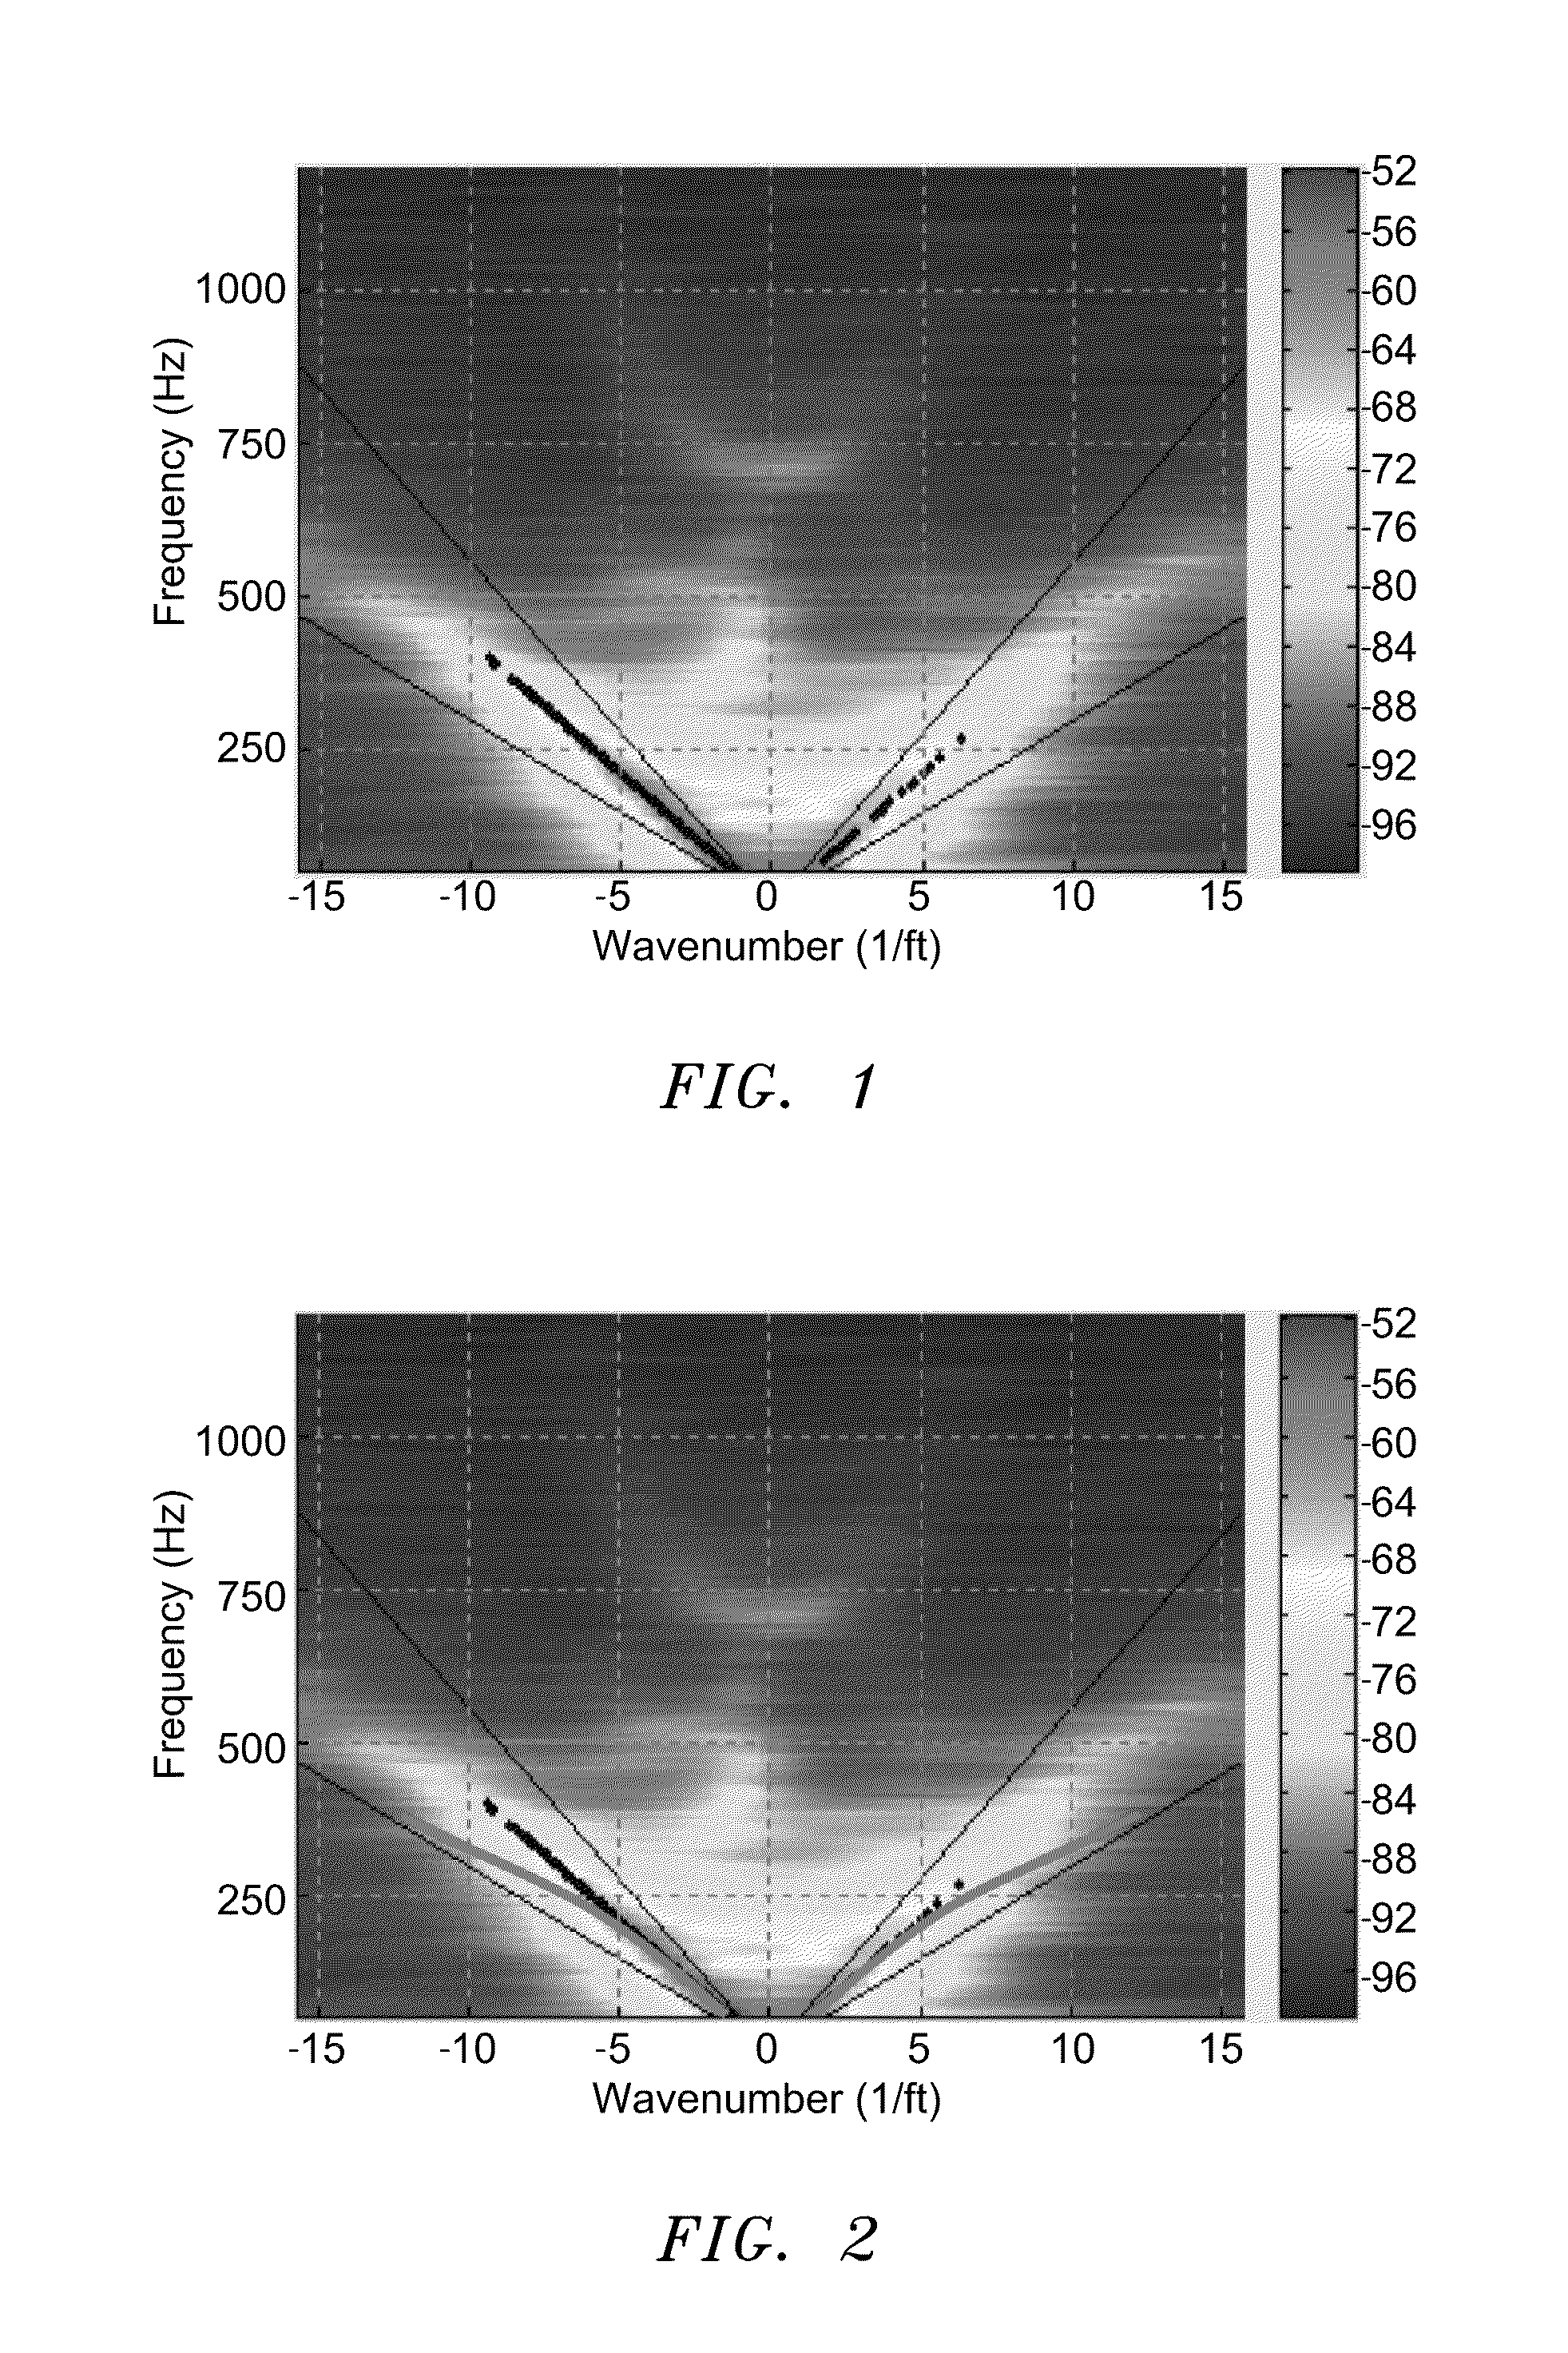 Dispersion Compensation Technique for Differential Sonar Measurement - Density Meter.